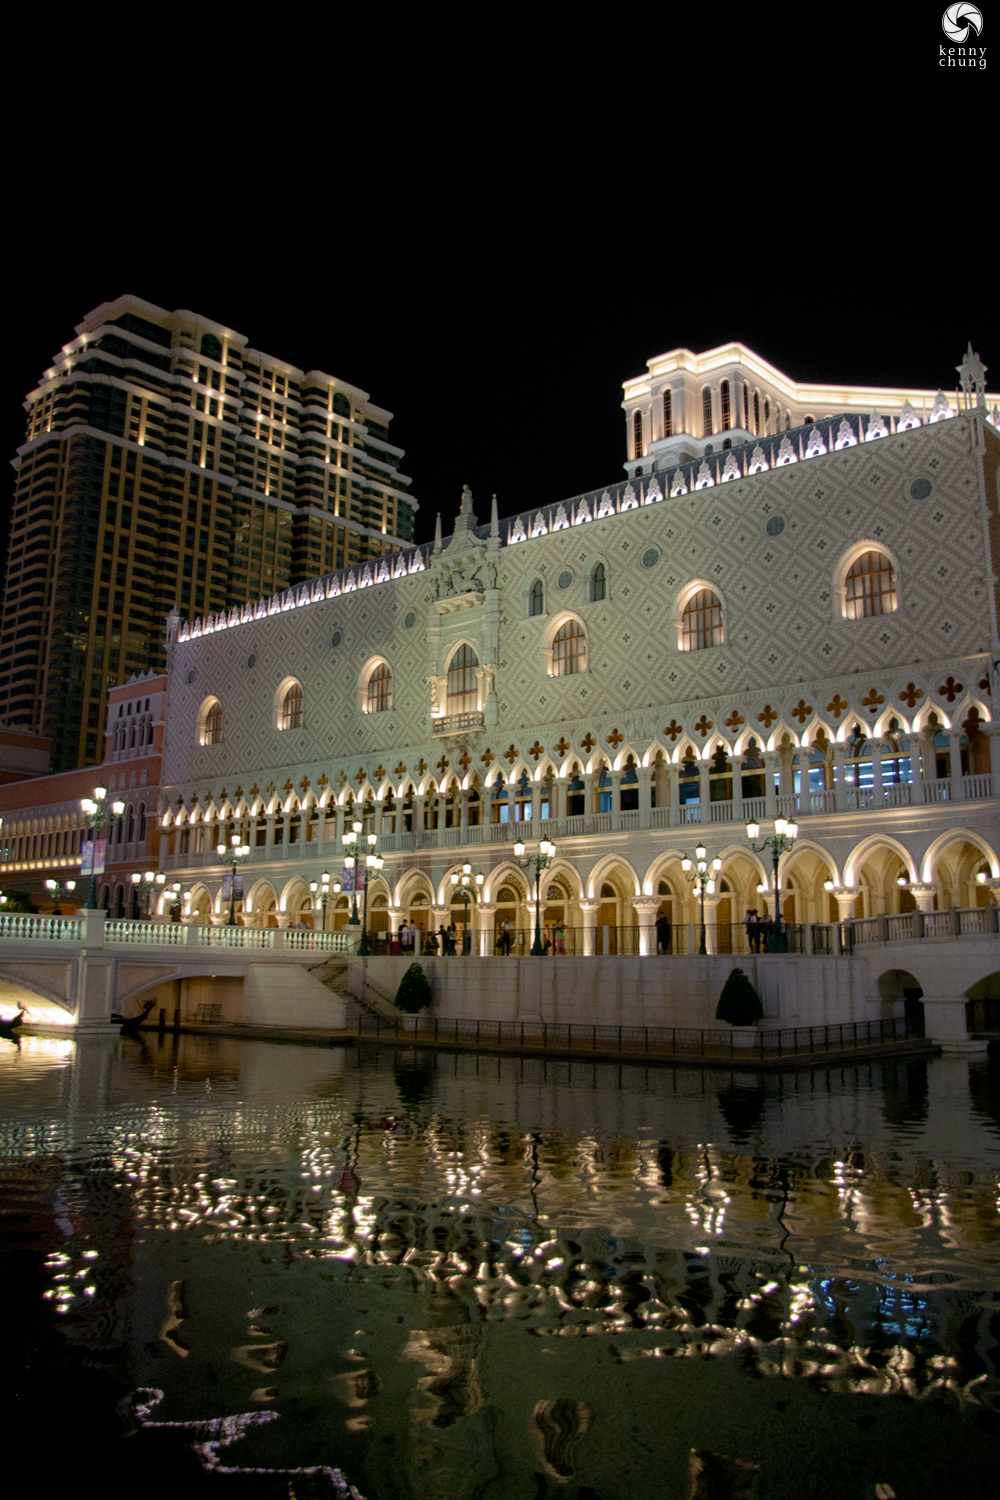 The entrance hall of The Venetian casino in Macau